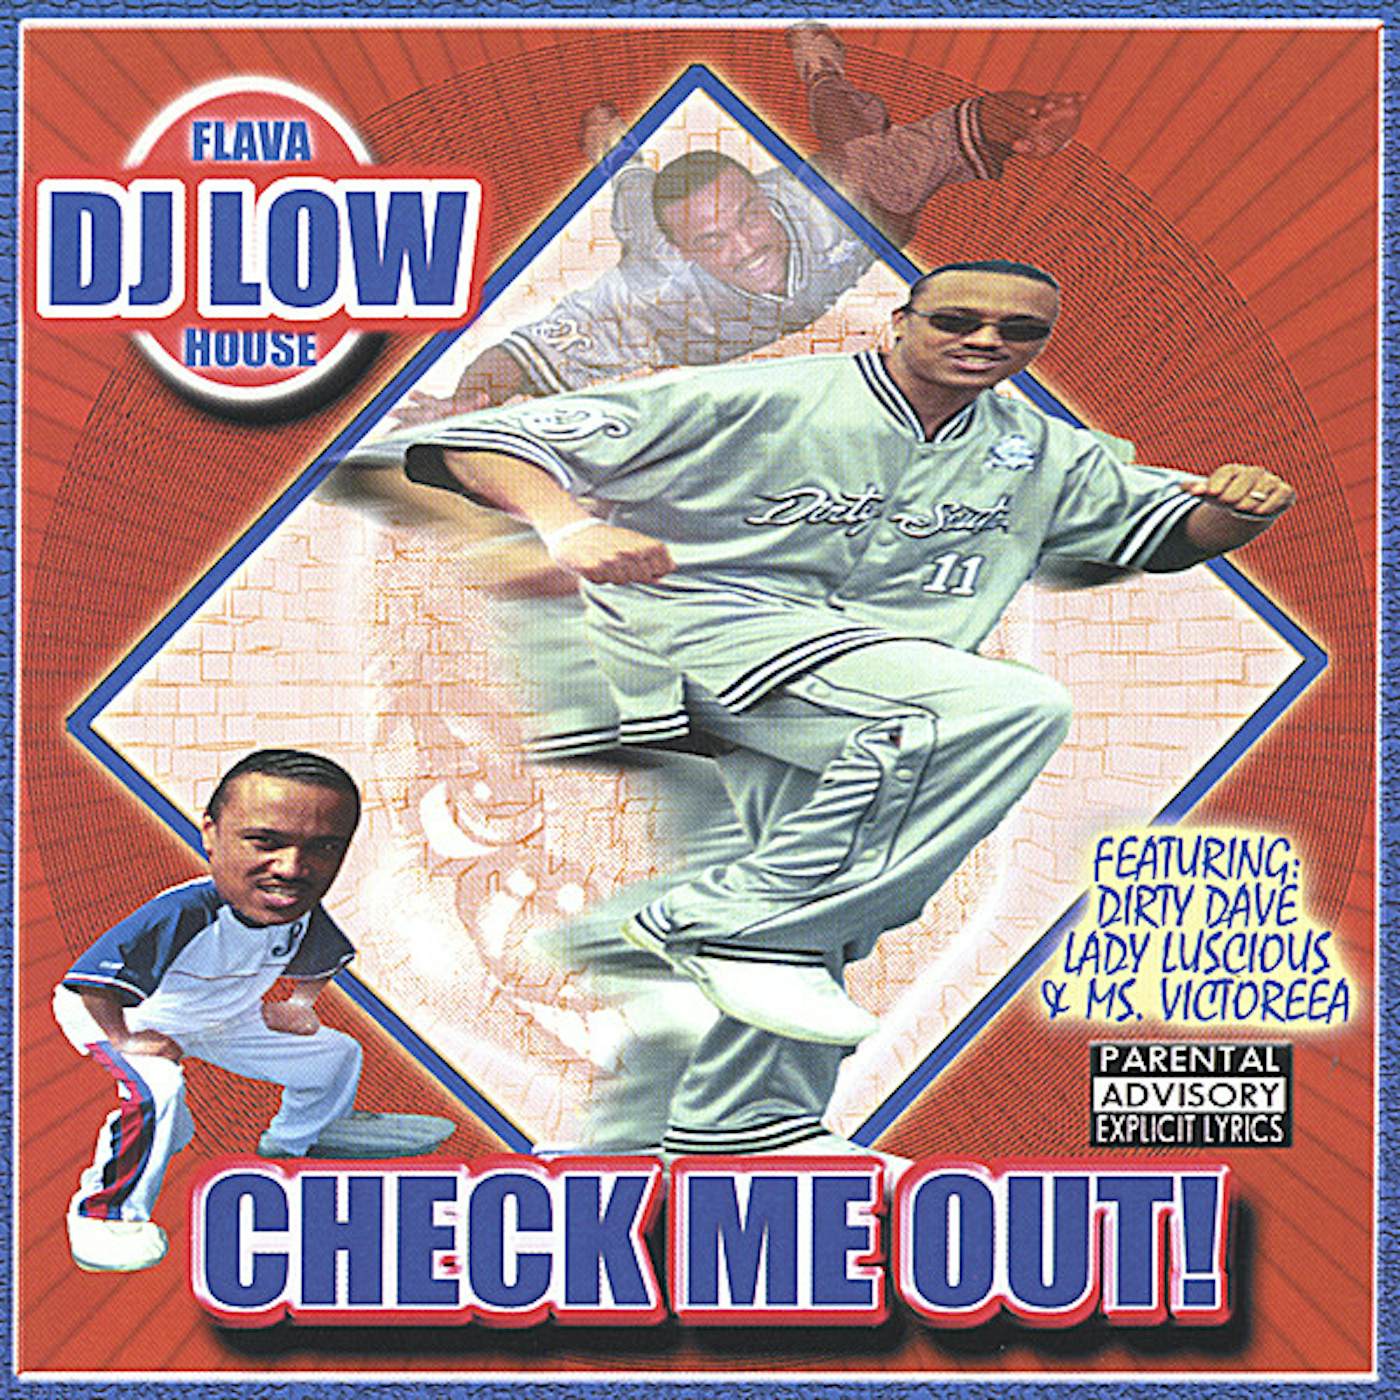 DJ Low CHECK ME OUT CD